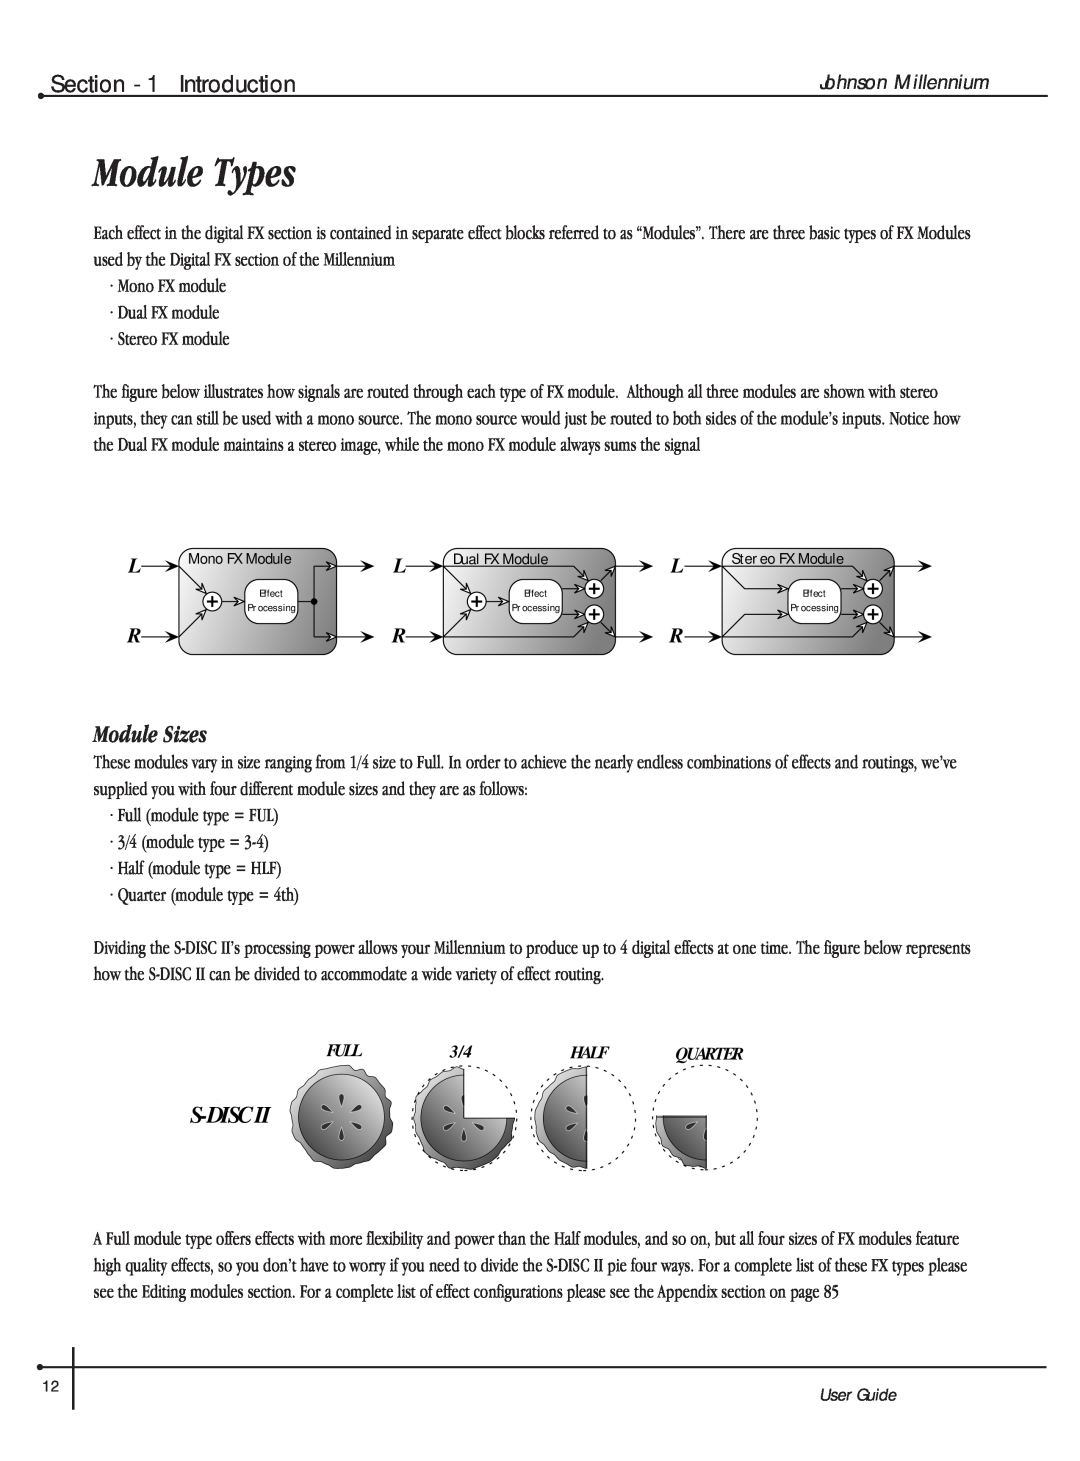 Millennium Enterprises Integrated Modeling Amplifier manual Module Types, Module Sizes, Introduction, User Guide, S-Discii 